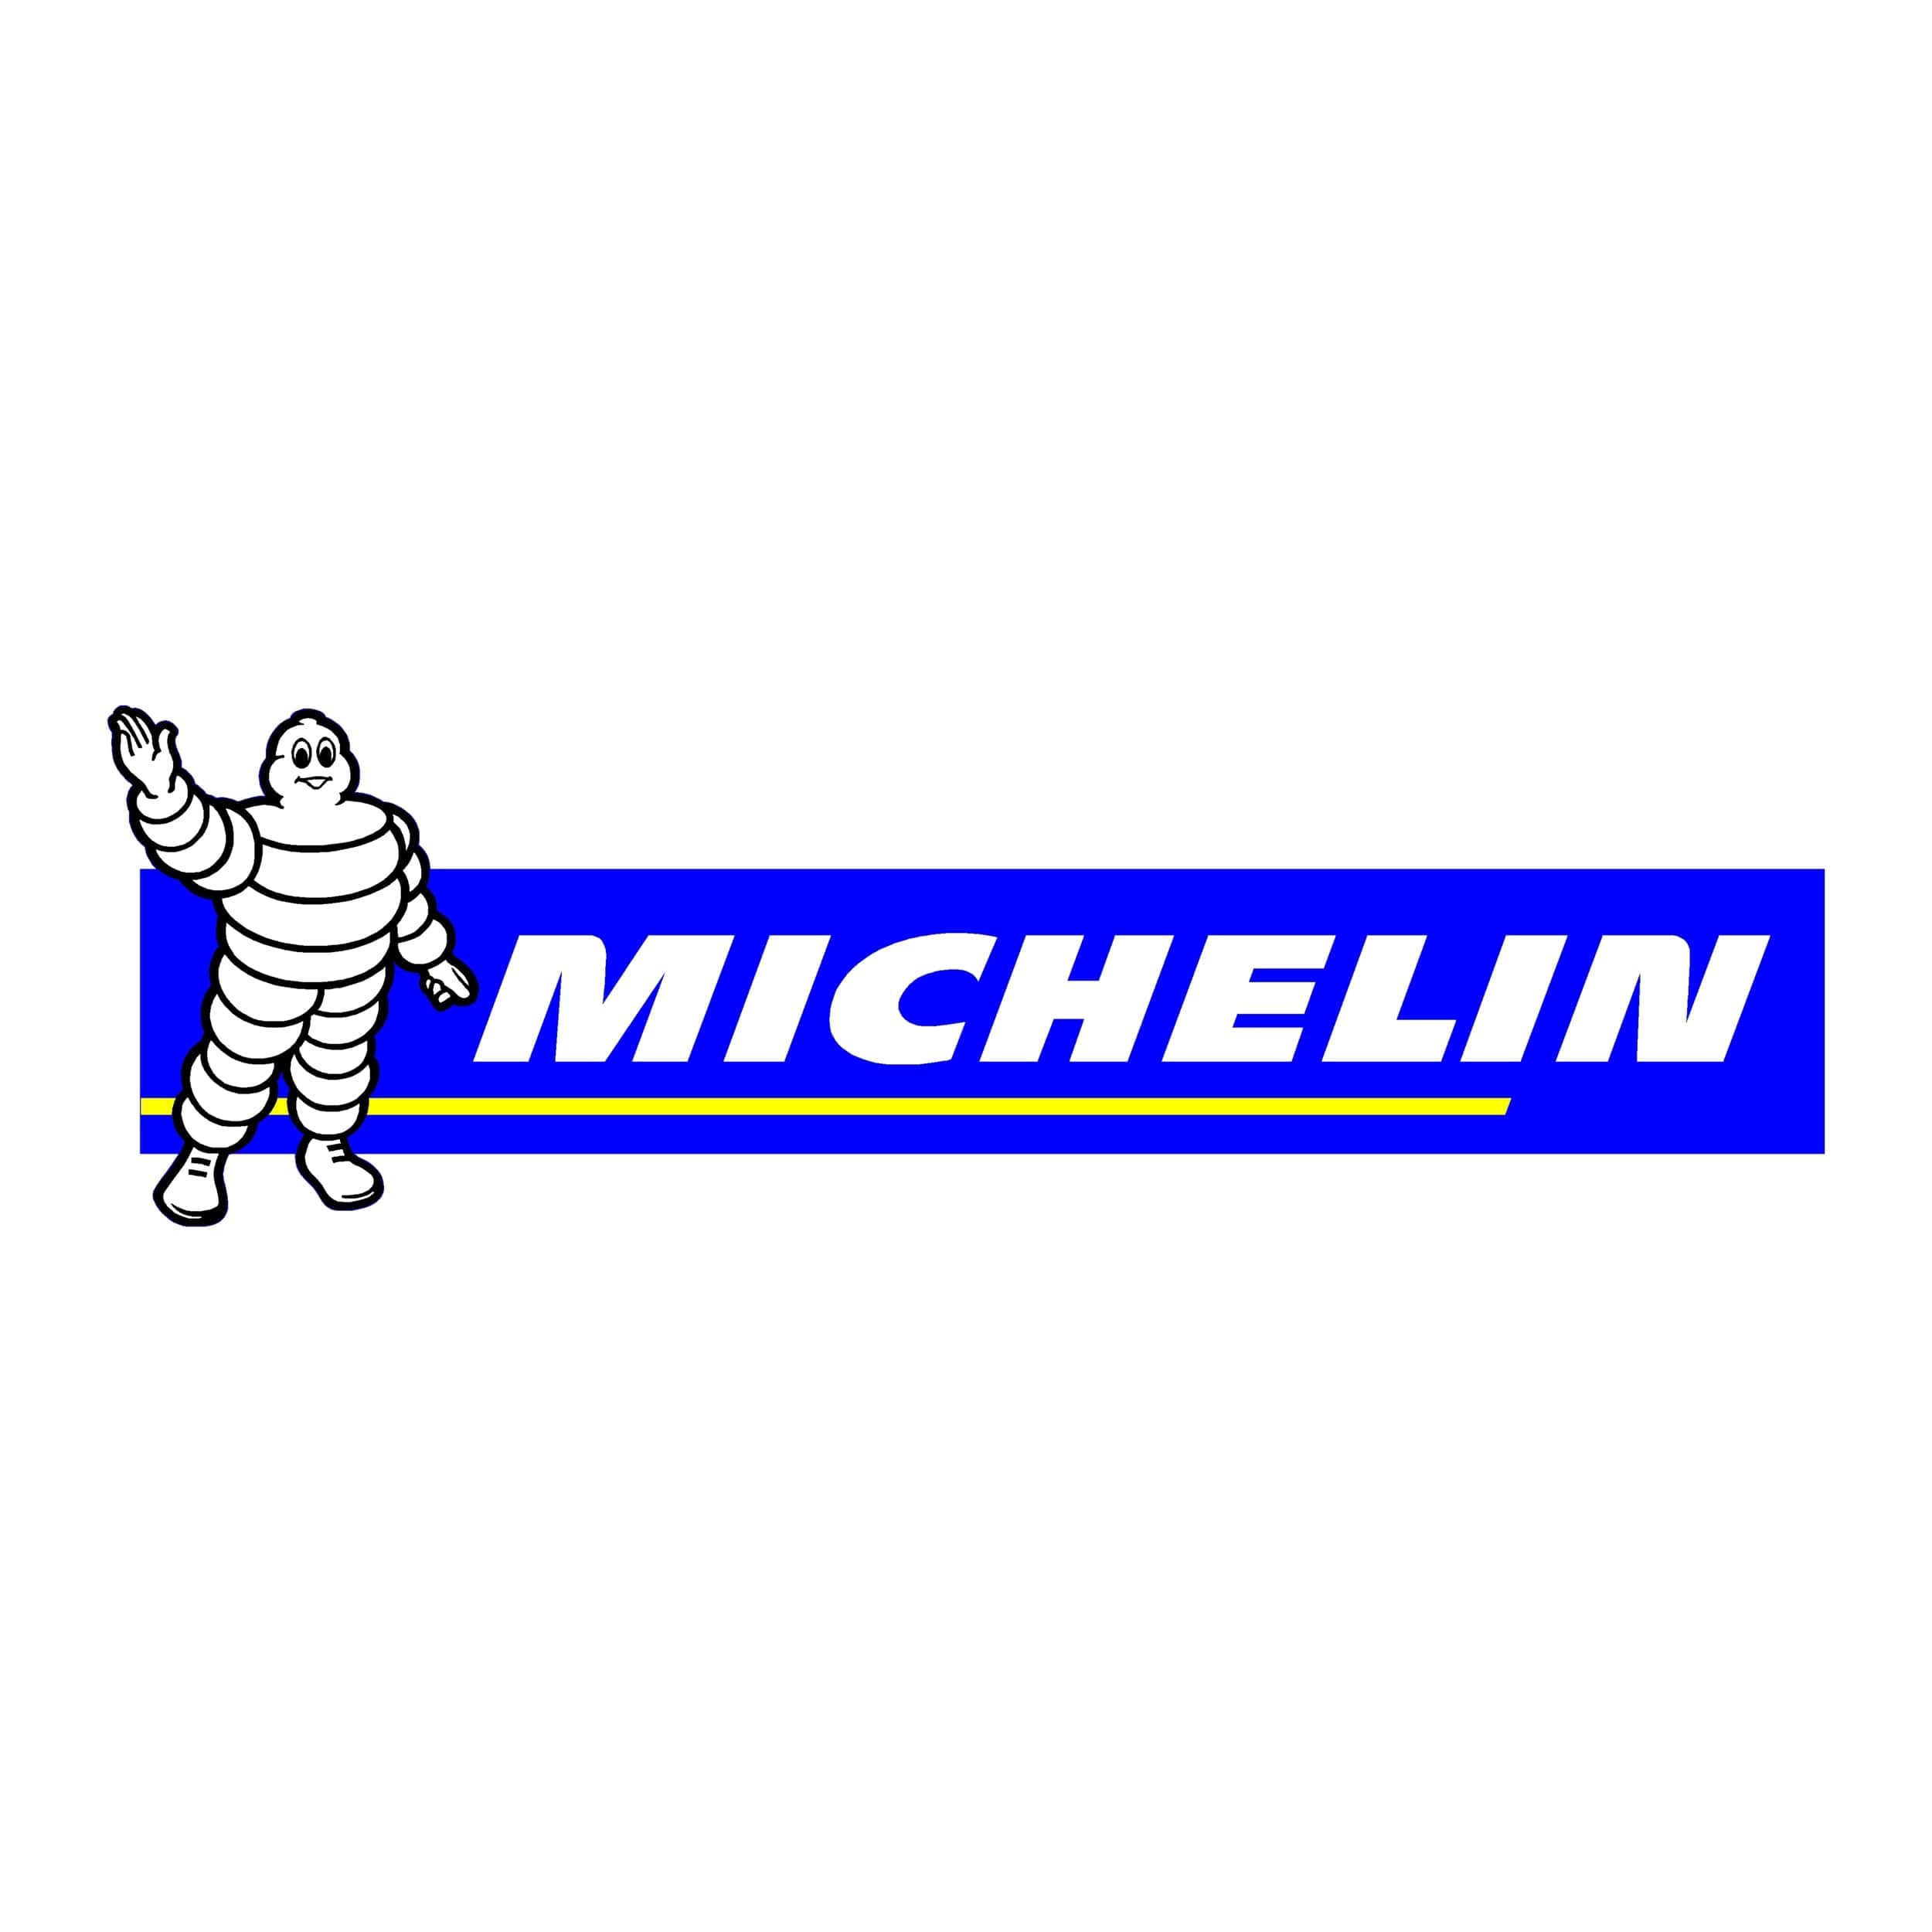 stickers-michelin-ref5-wrc-rallye-autocollant-sticker-4x4-competition-tuning-auto-moto-camion-deco-rallie-autocollants-min